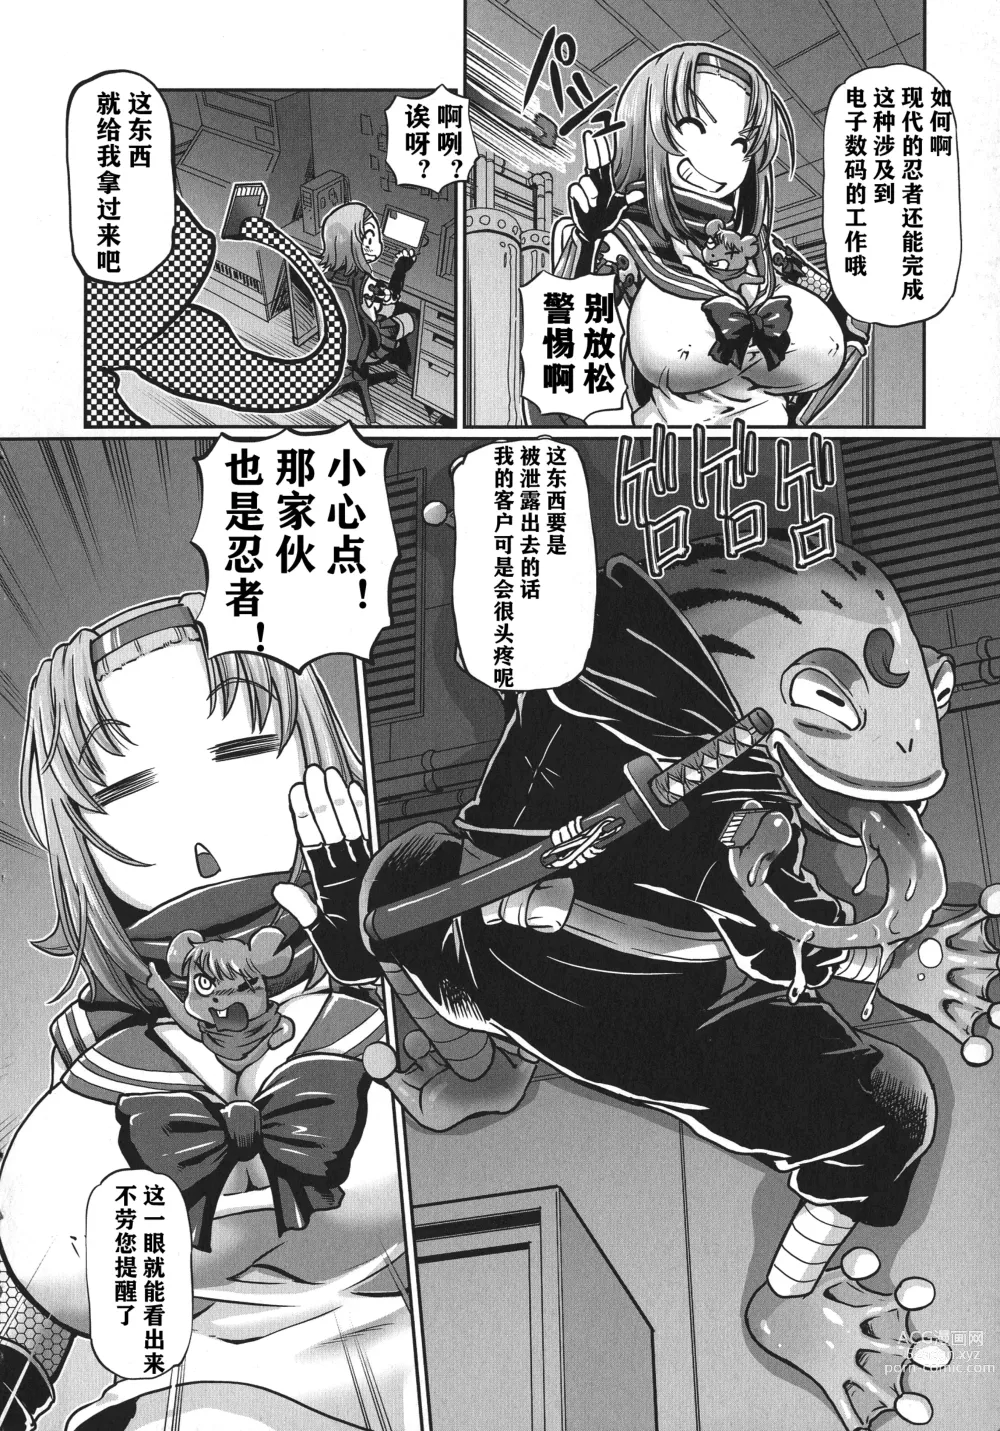 Page 9 of manga JK Ninja Marimo Ninpouchou